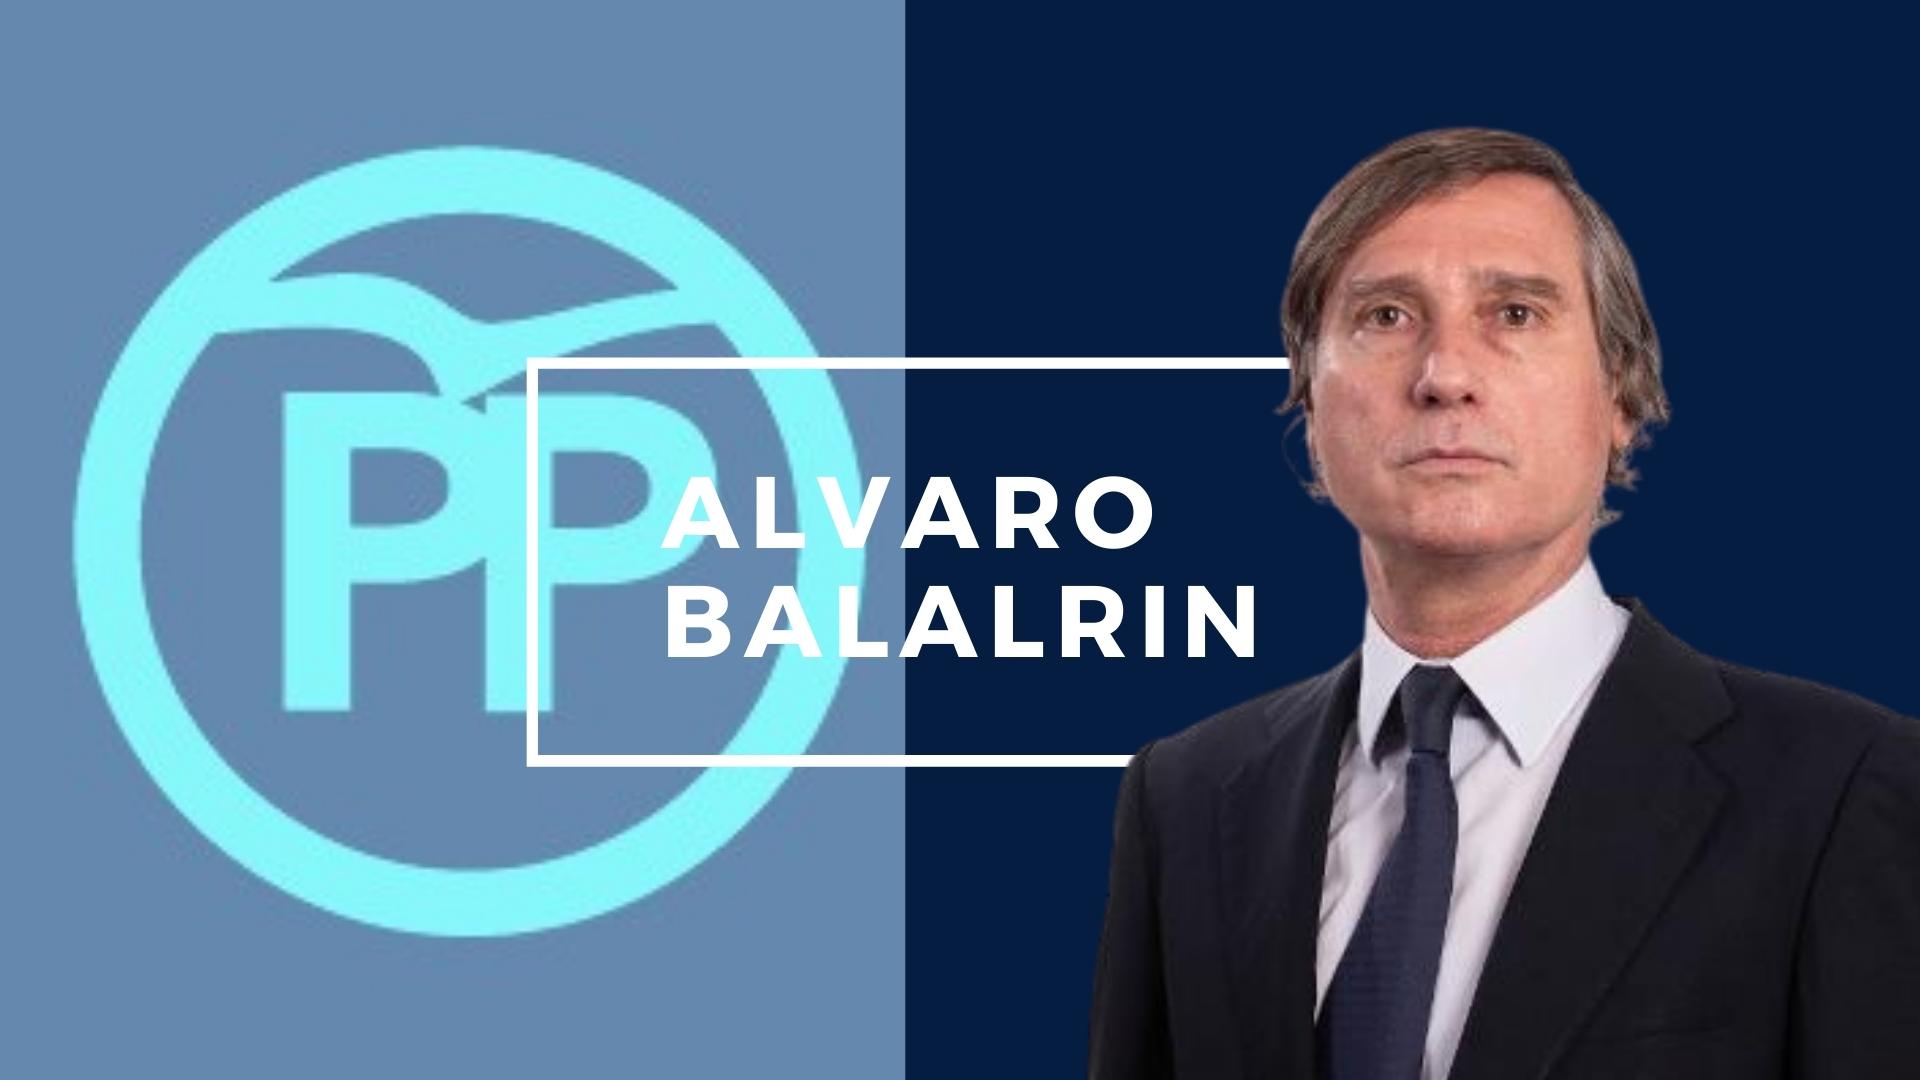 ALVARO BALALRIN